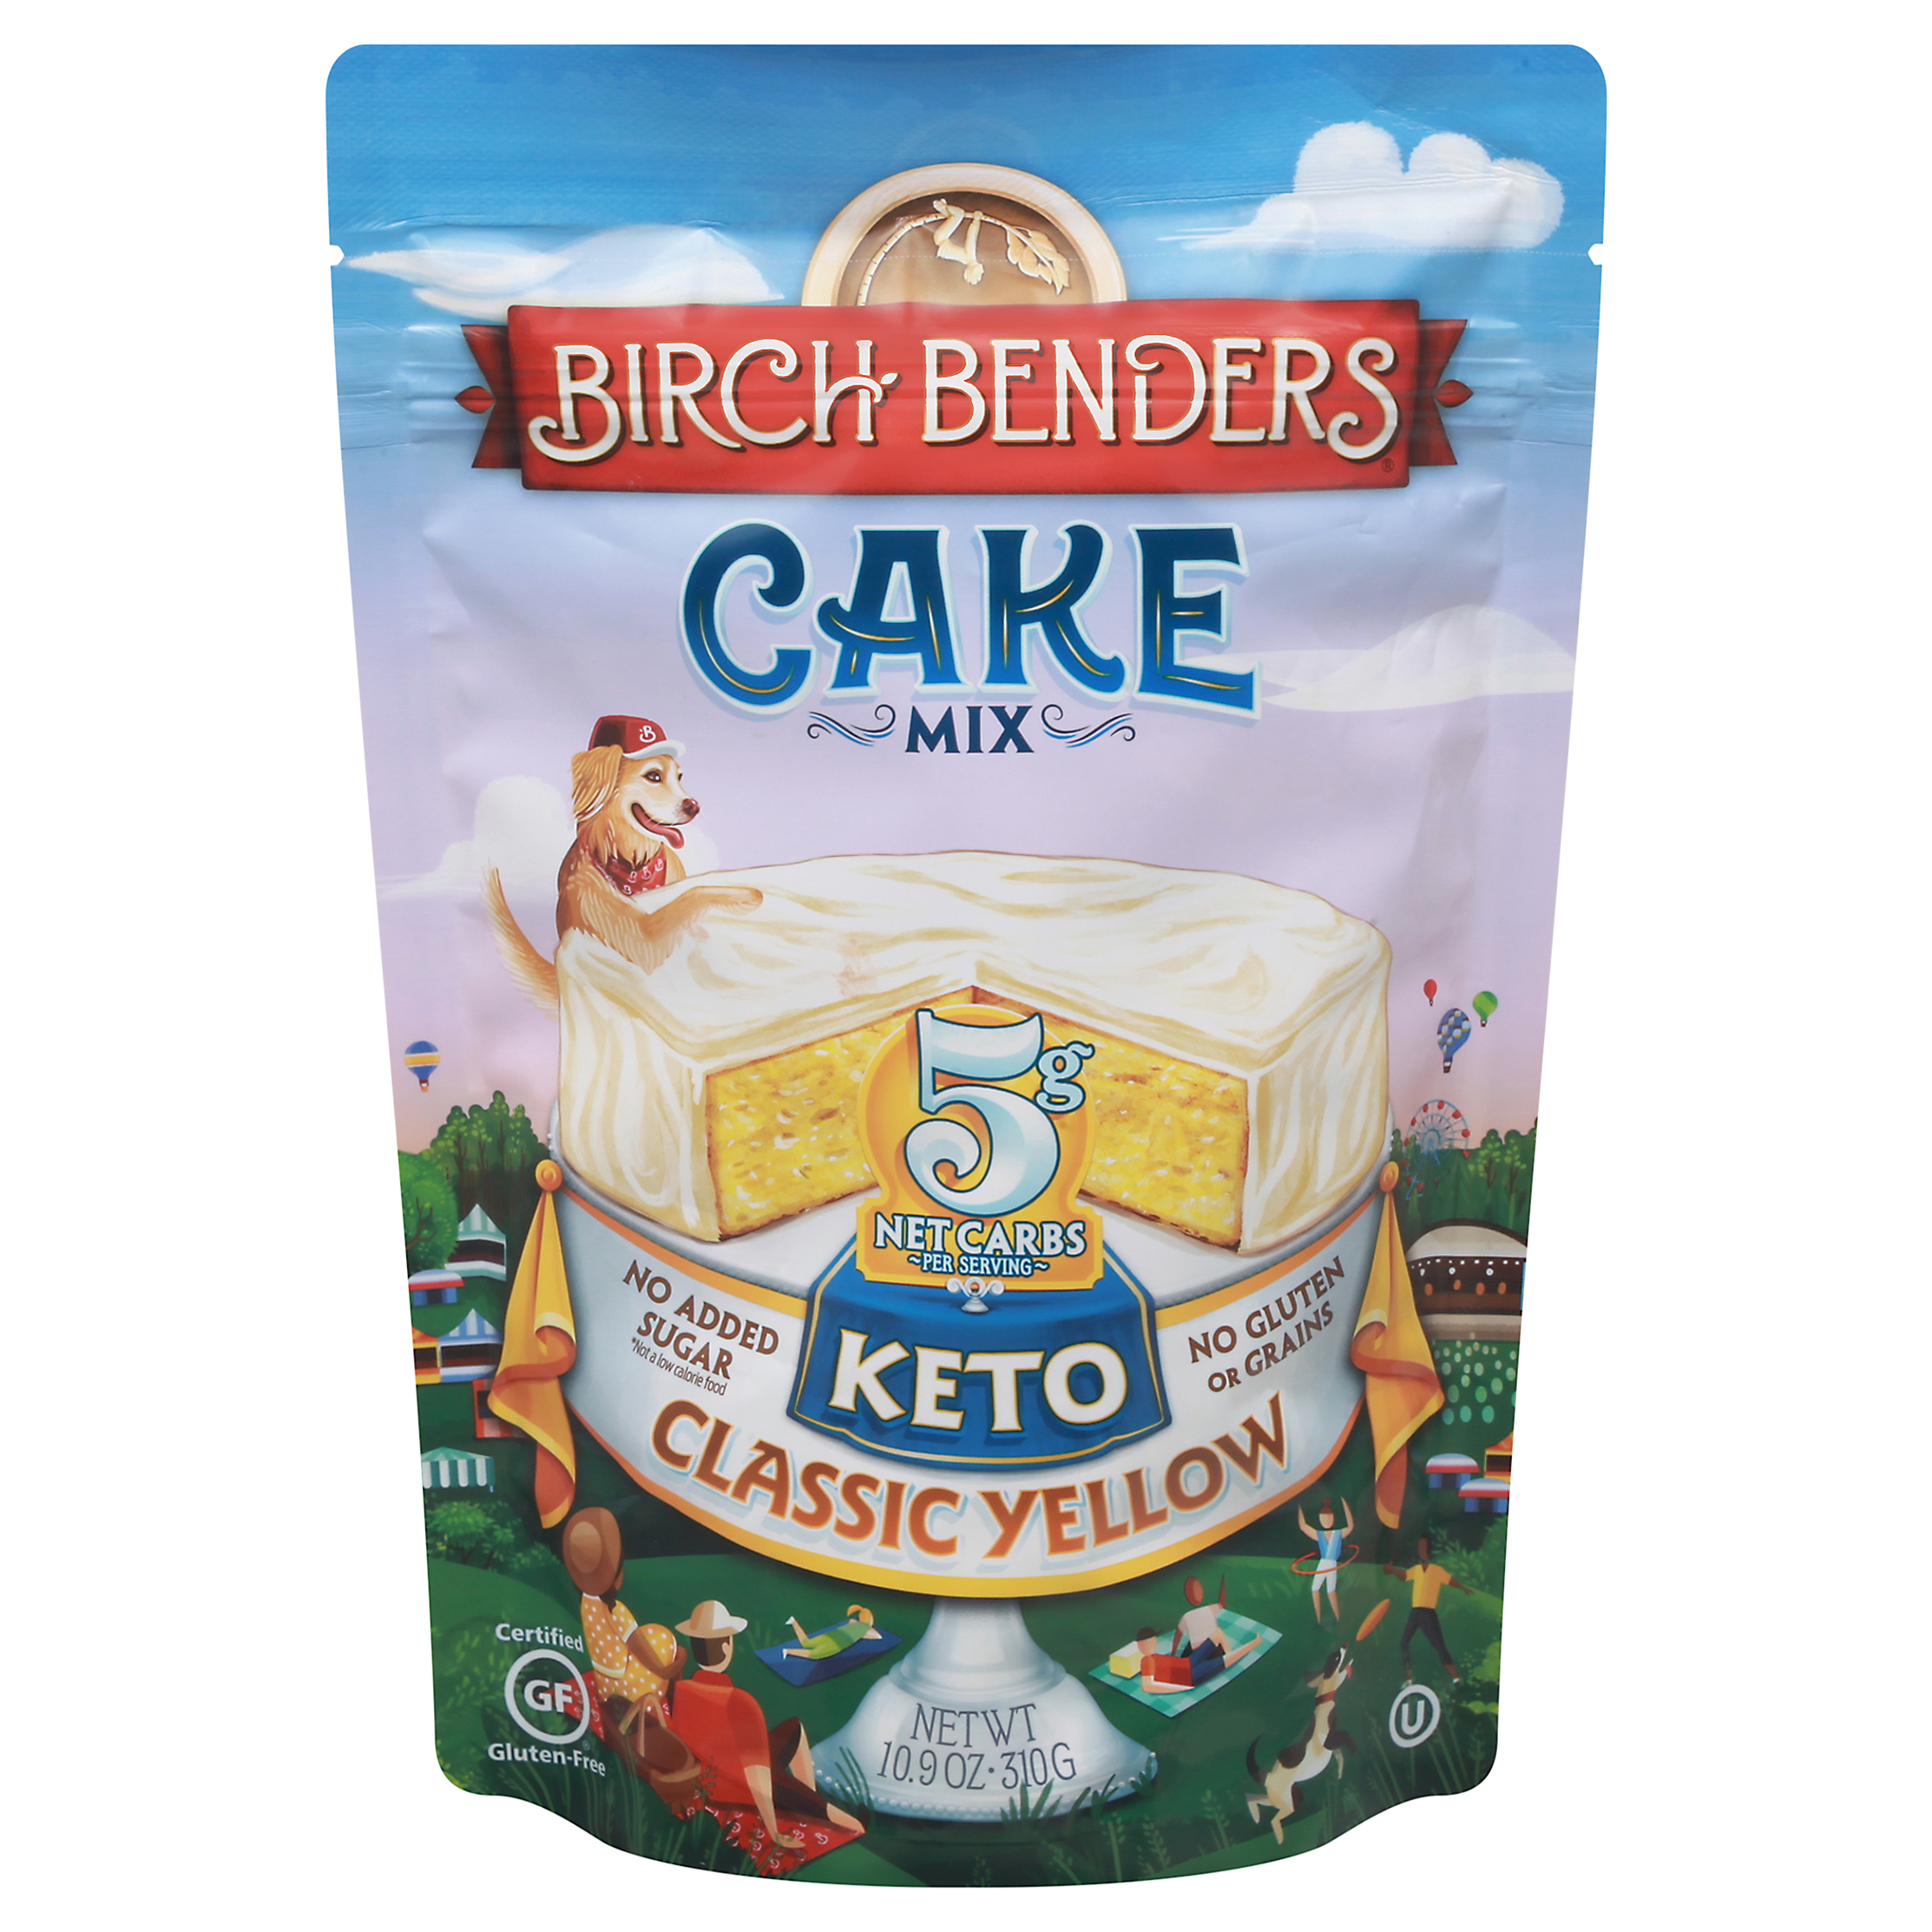 Birch Benders Keto Classic Yellow Cake Mix, 10.9oz - image 4 of 4